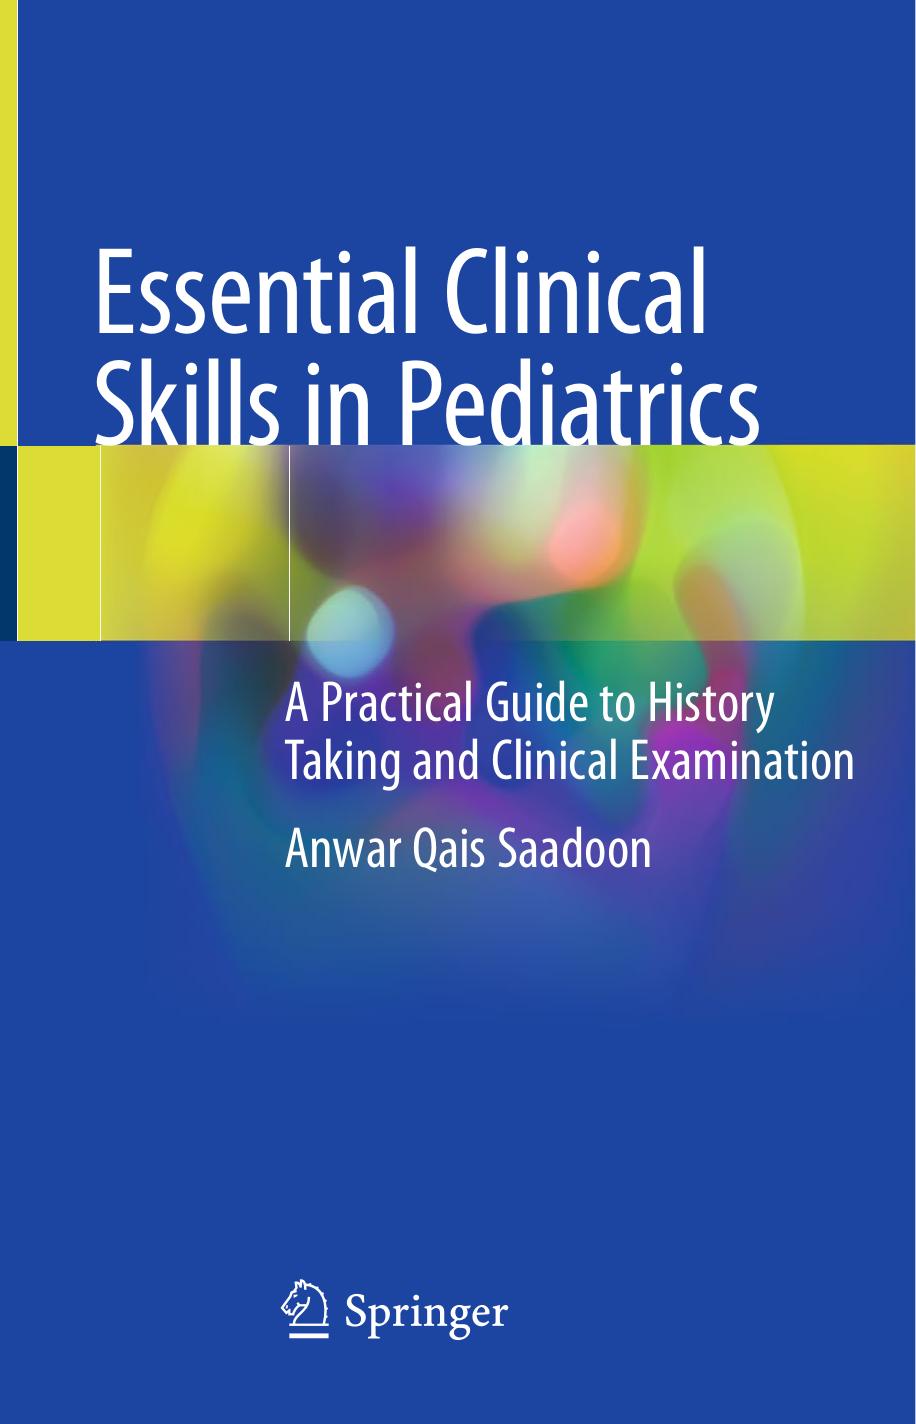 Essential Clinical Skills in Pediatrics 2018